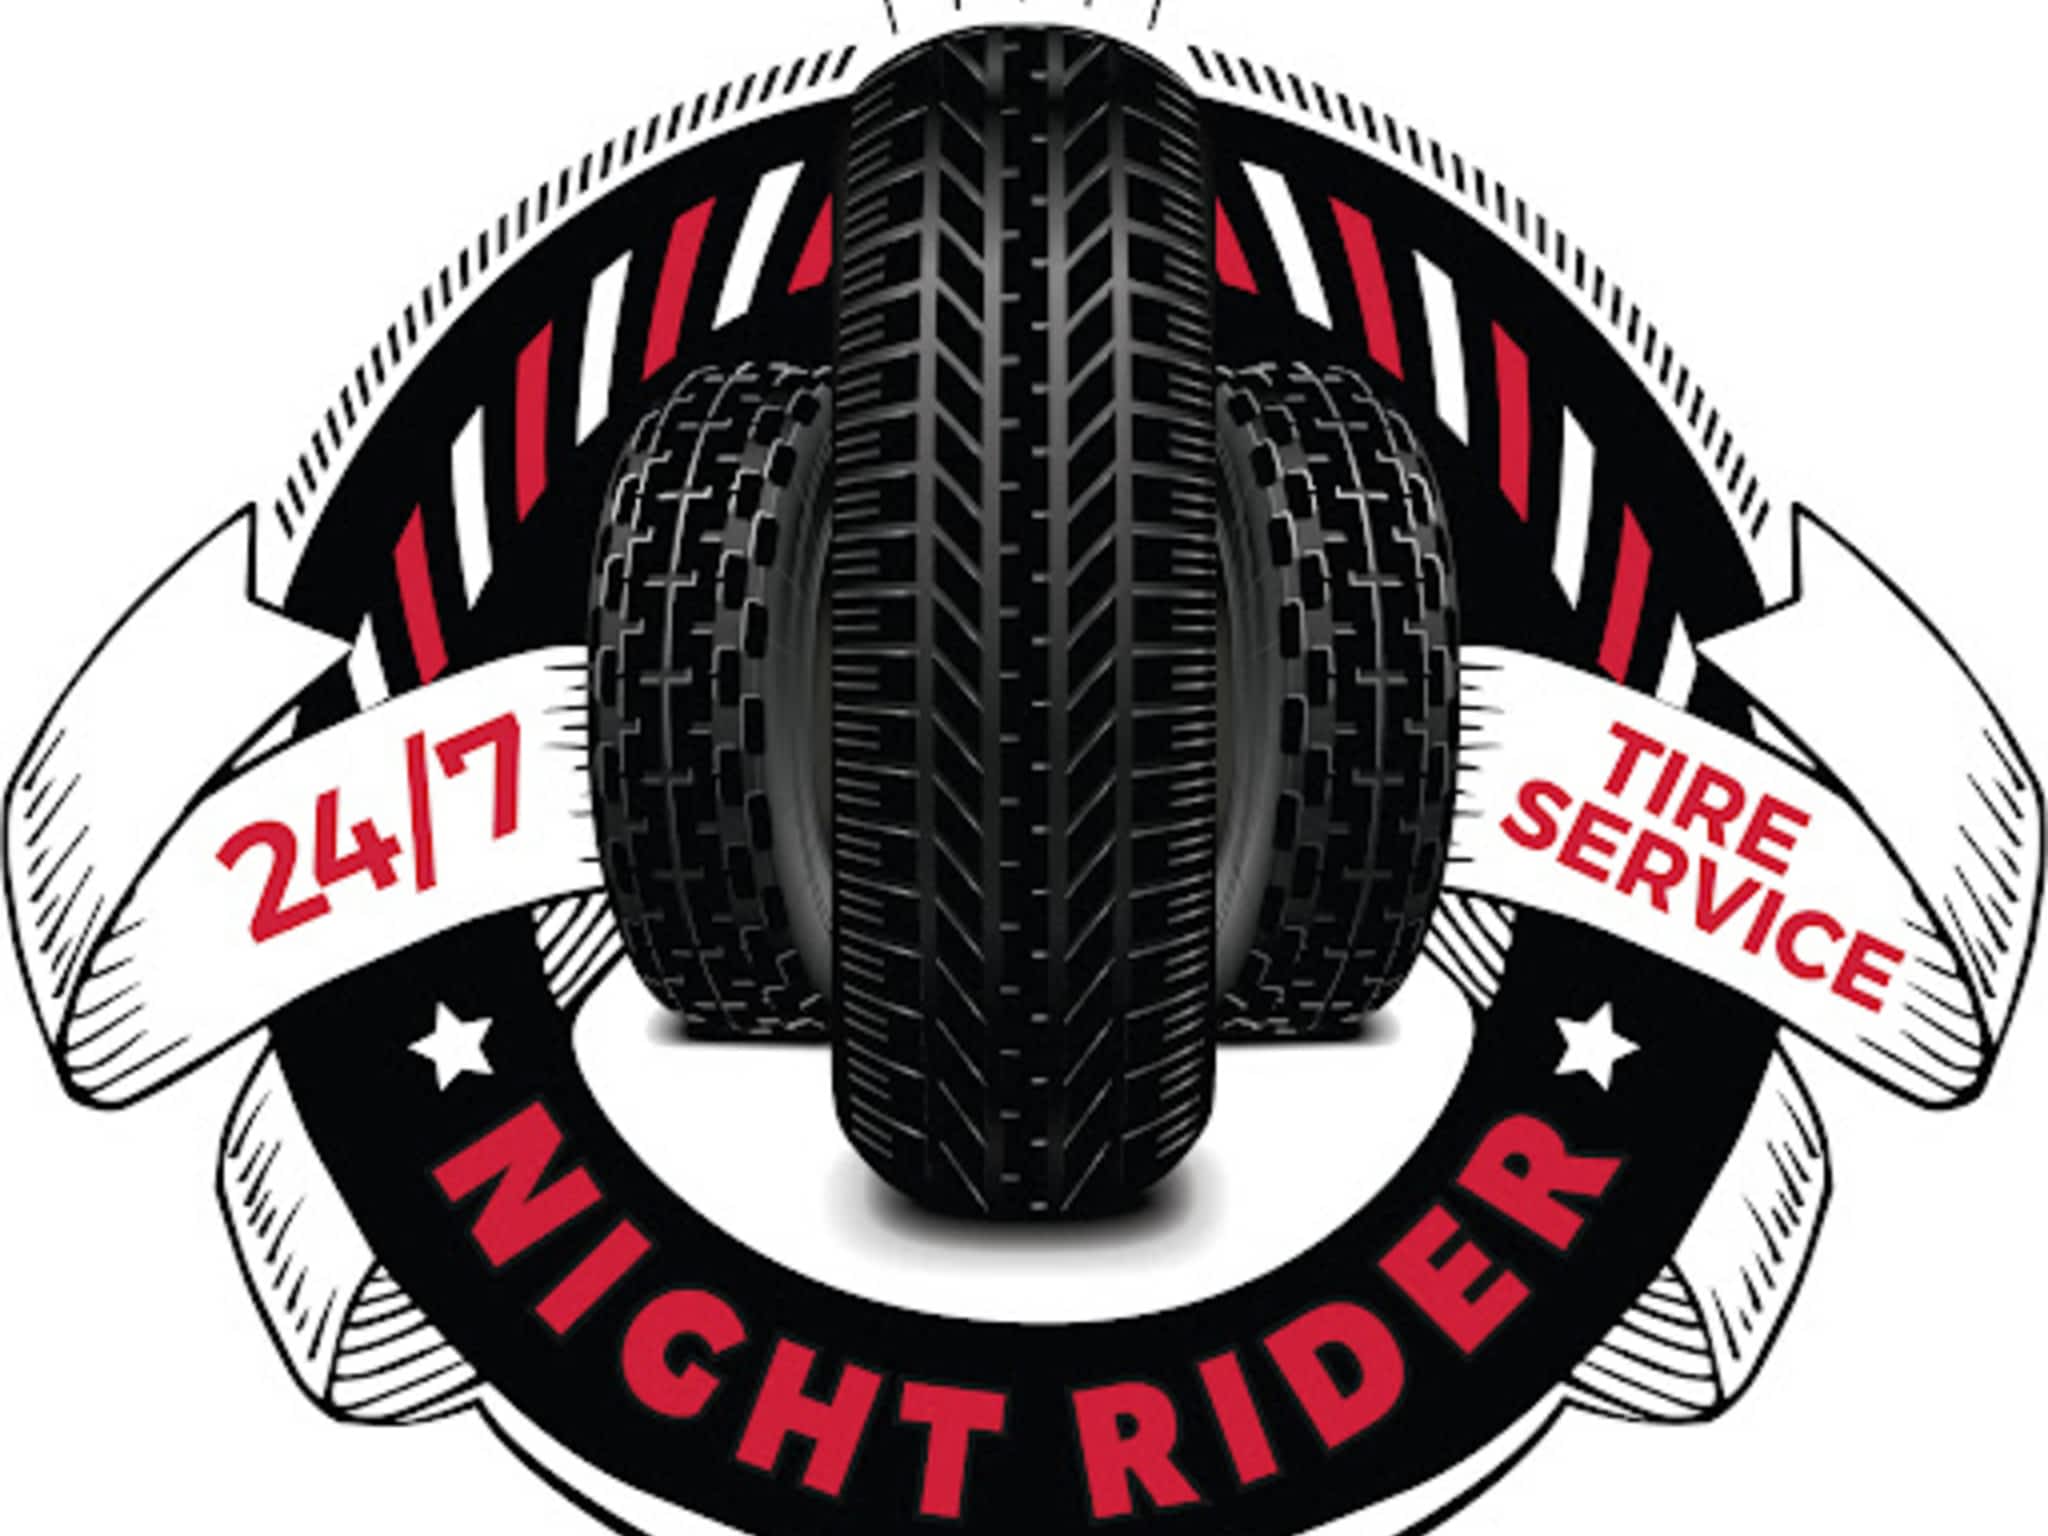 photo Night Rider Tire Service